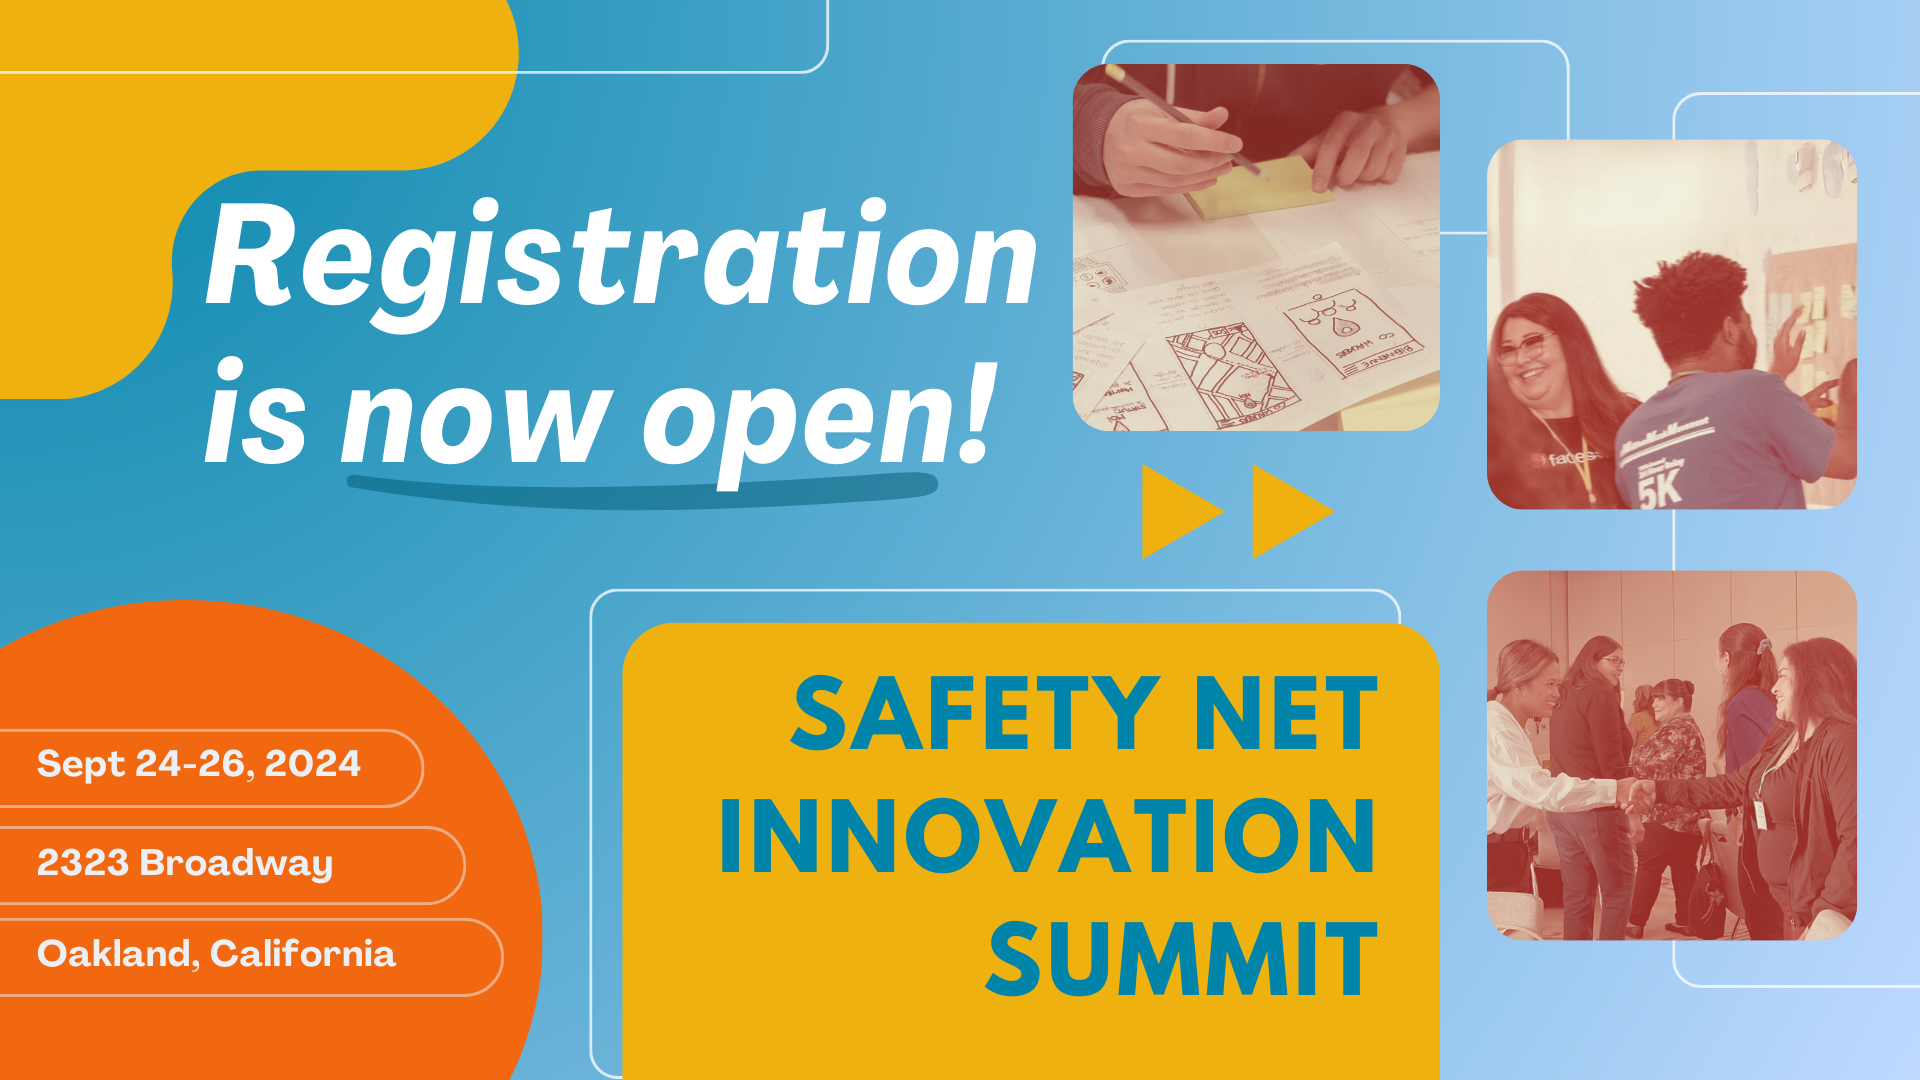 safety-net-innovation-summit-registration-open-16x9